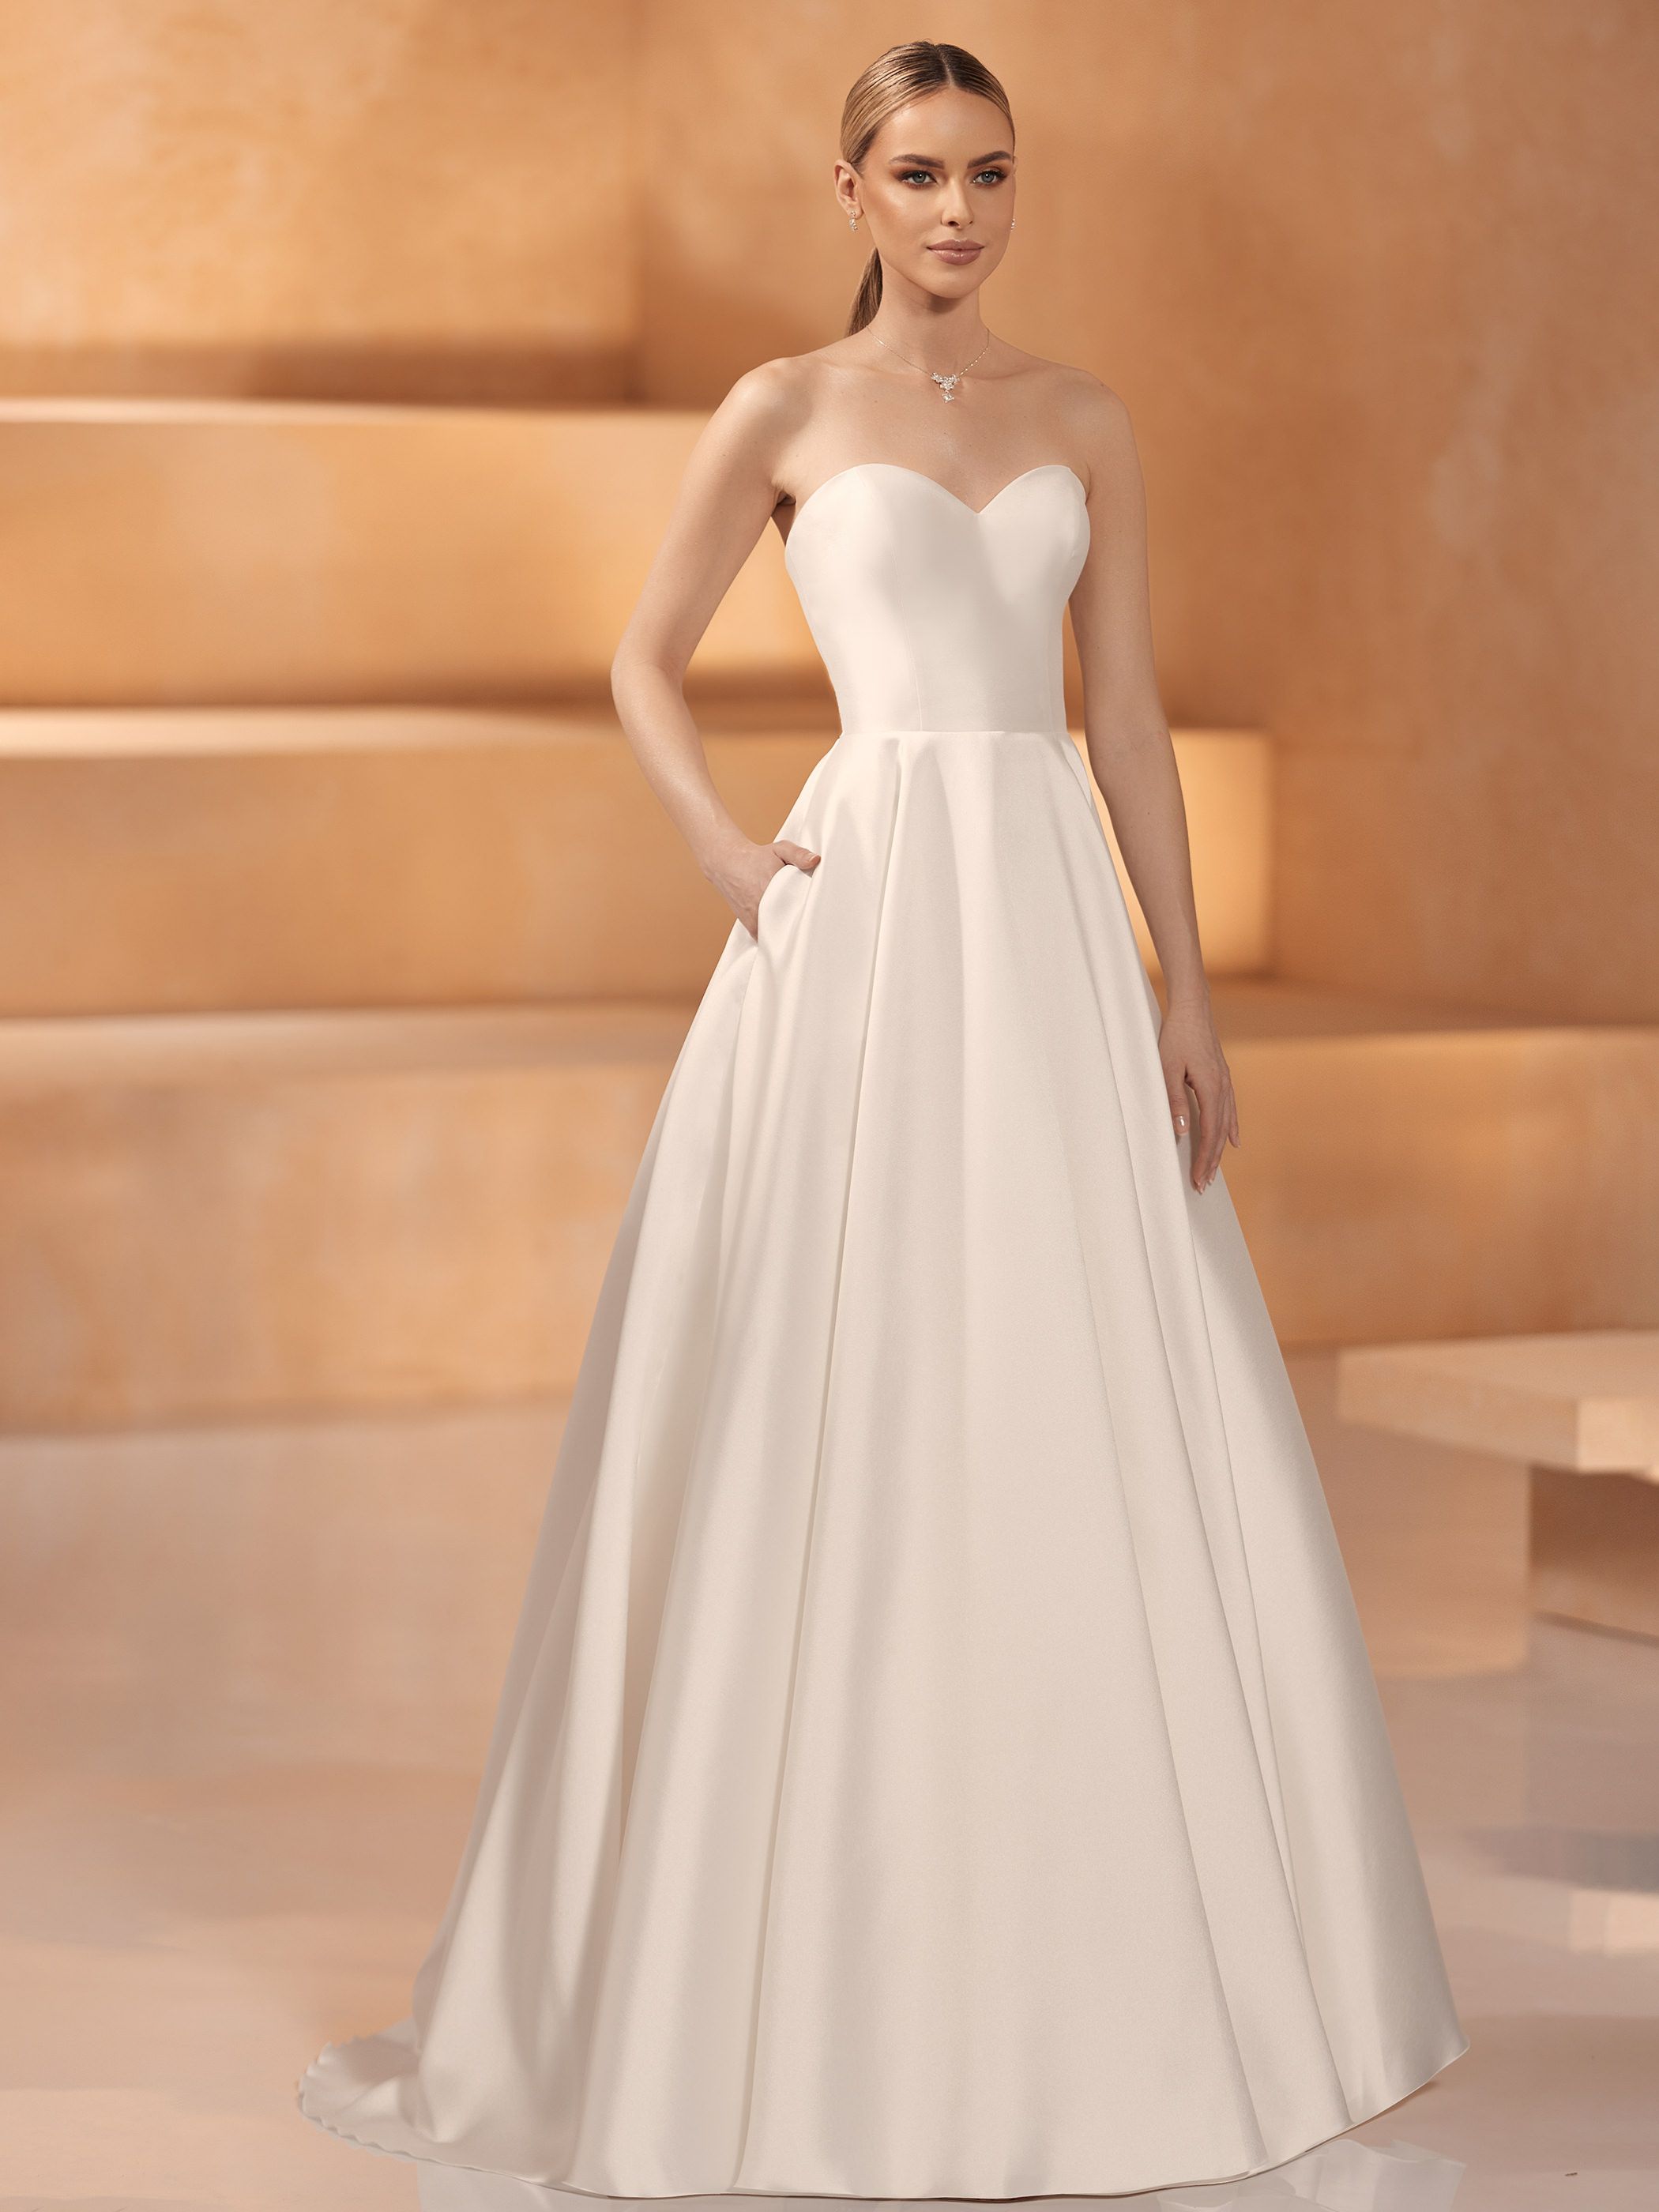 Olga wedding dress by Bianco Evento